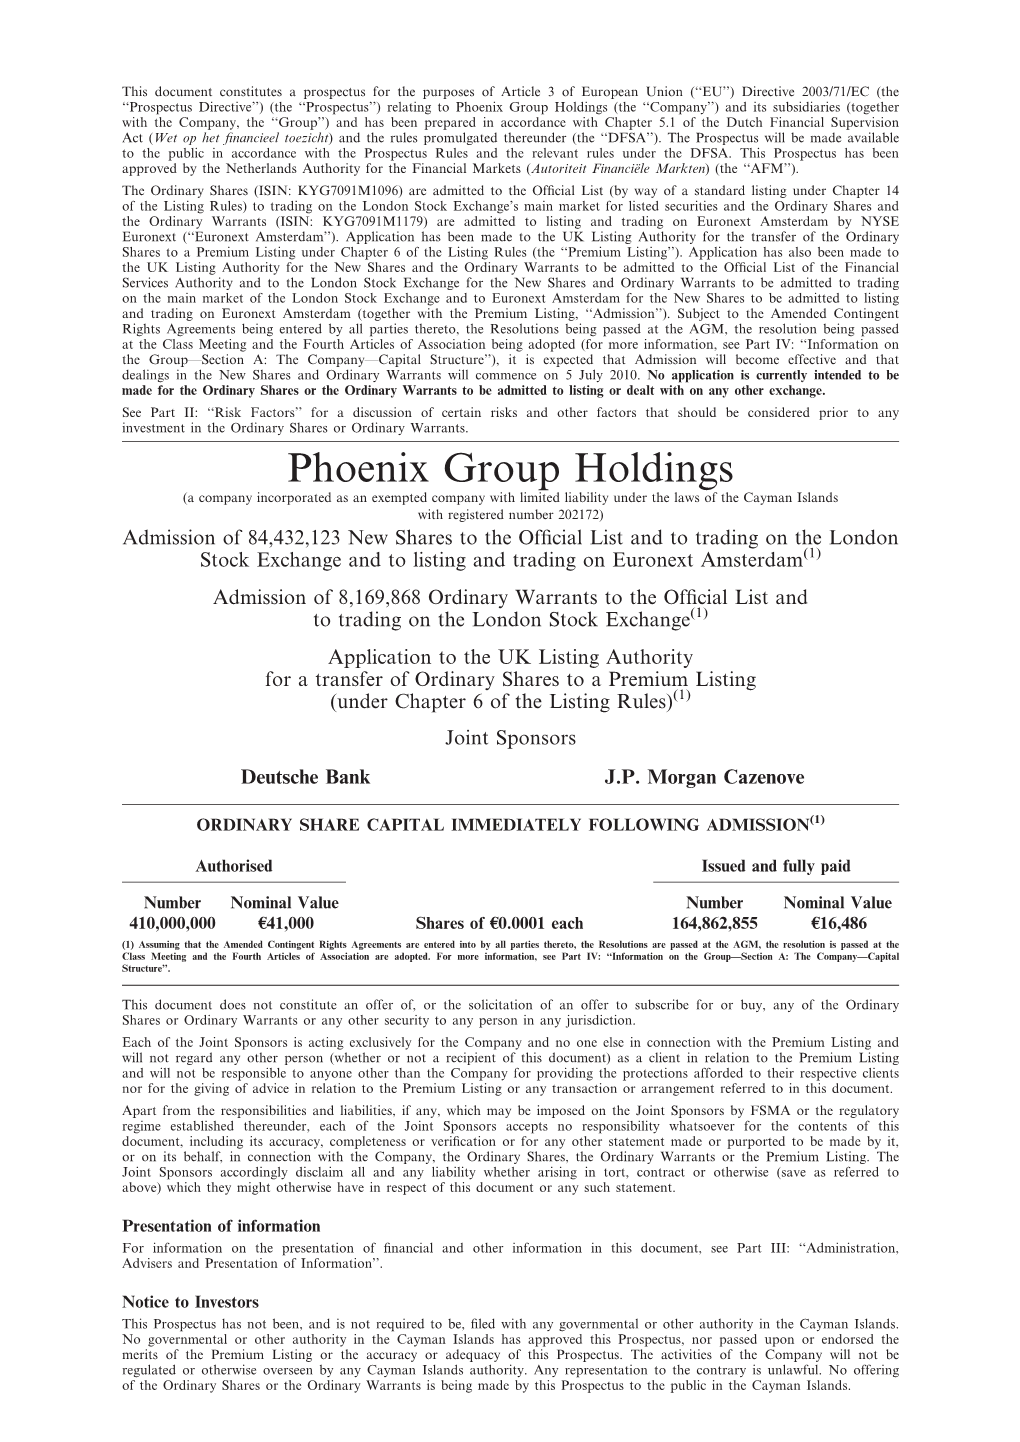 Phoenix Group Holdings